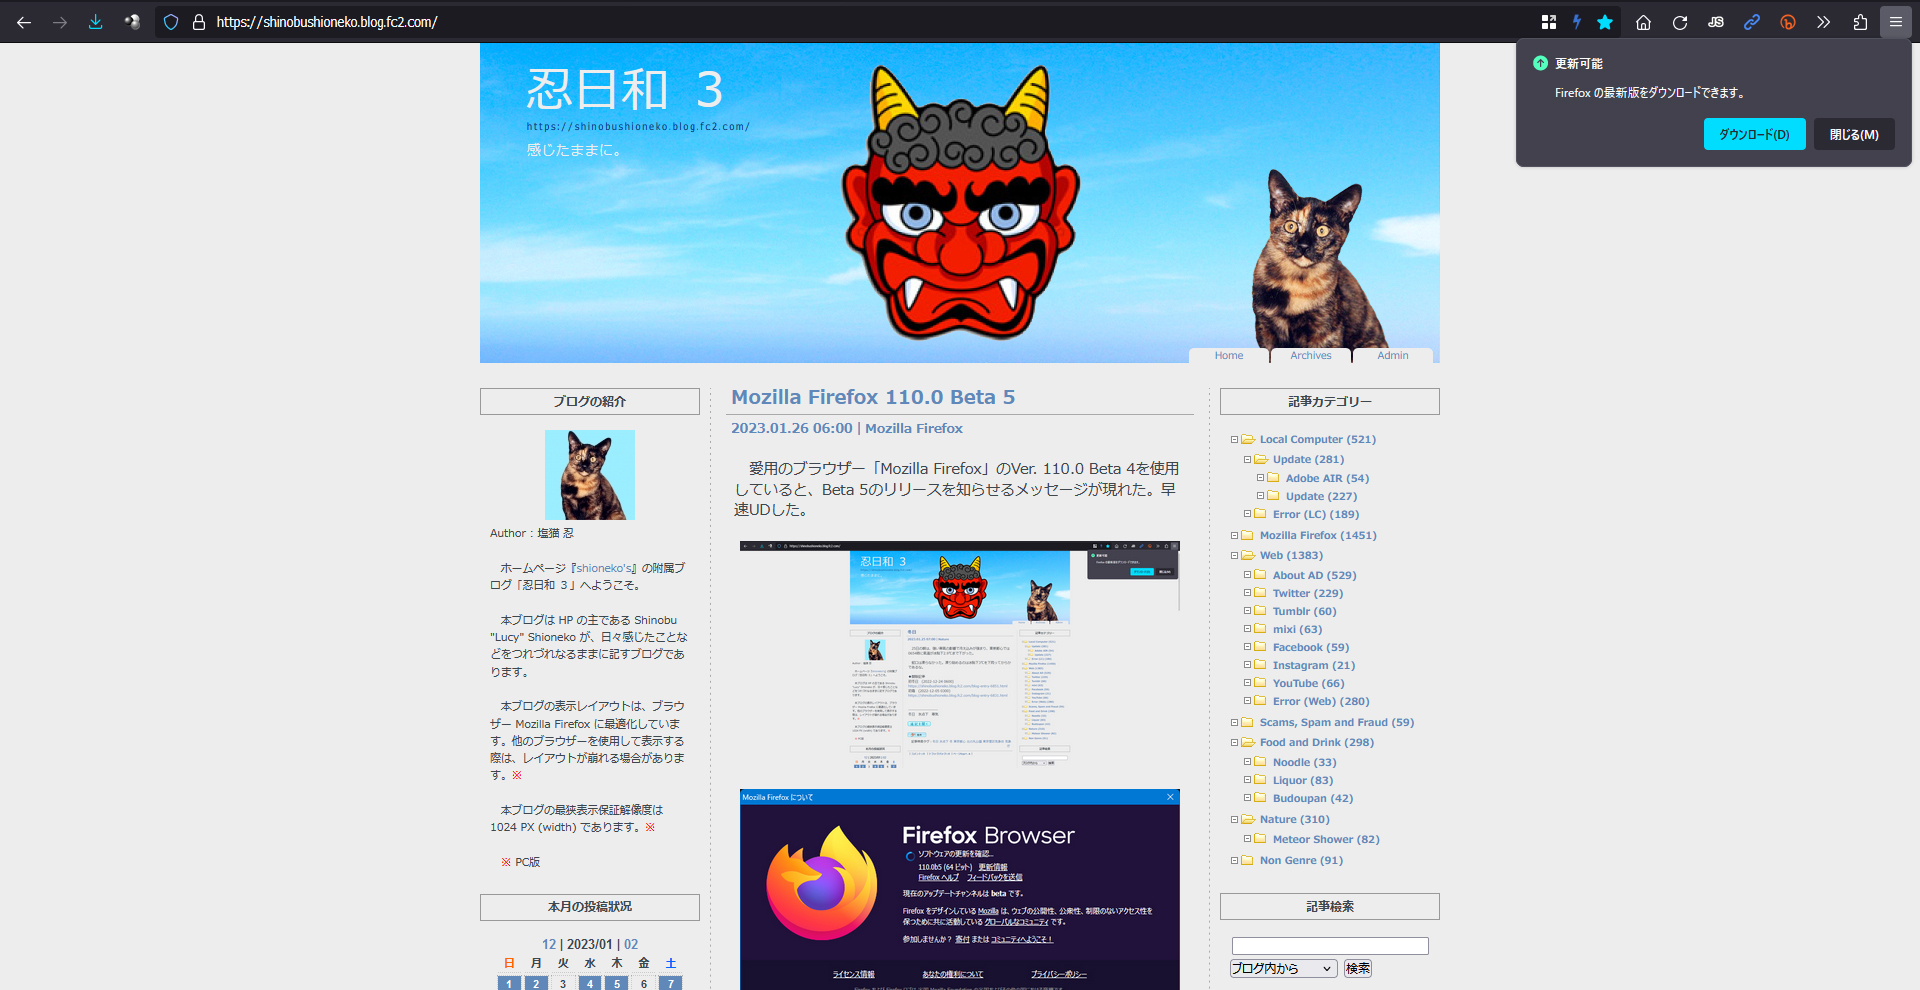 Mozilla Firefox 110.0 Beta 6